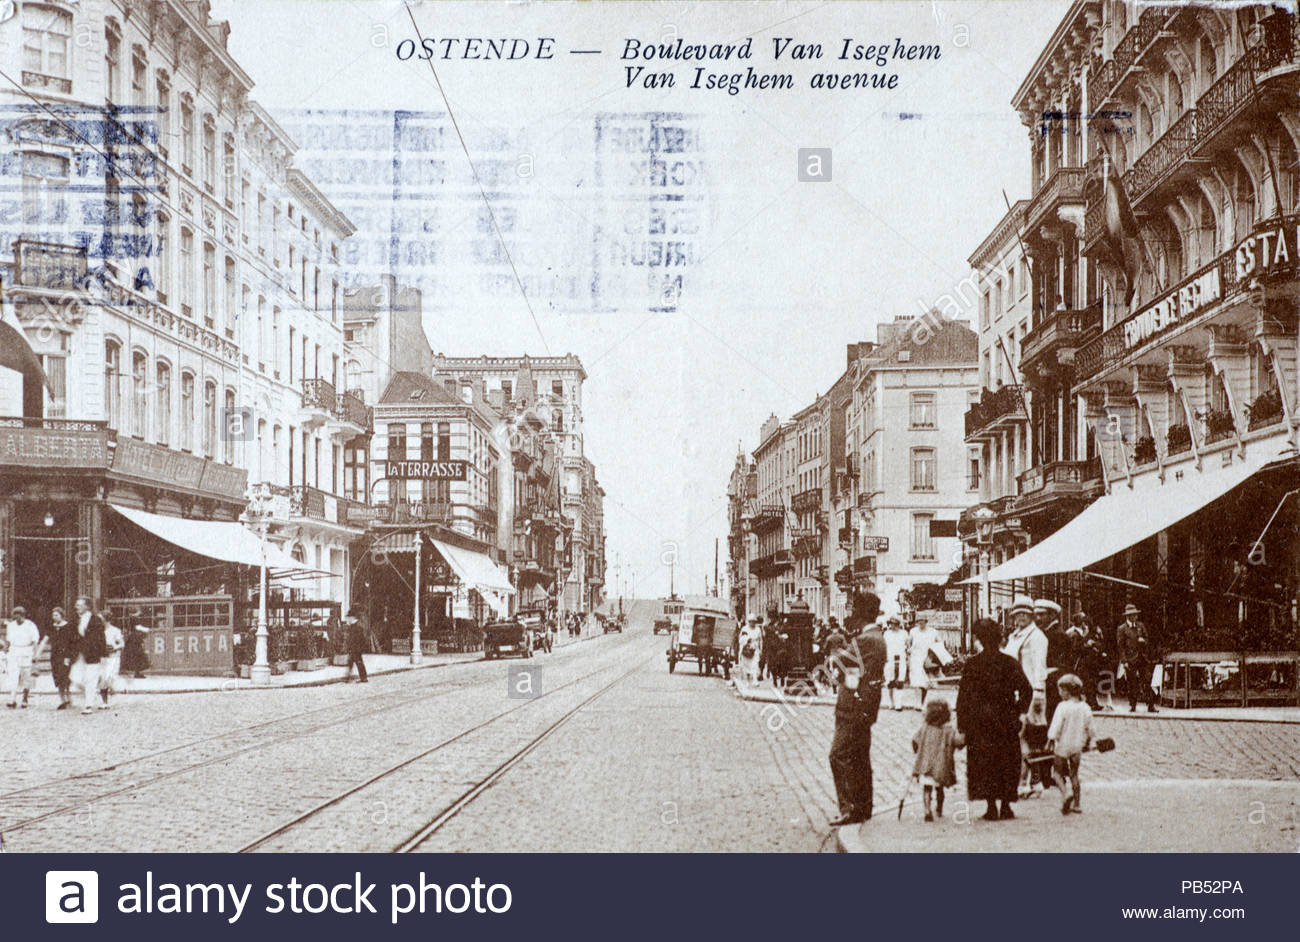 Ostende Belgium, Boulevard Van Iseghem avenue, vintage postcard from 1932 Stock Photo